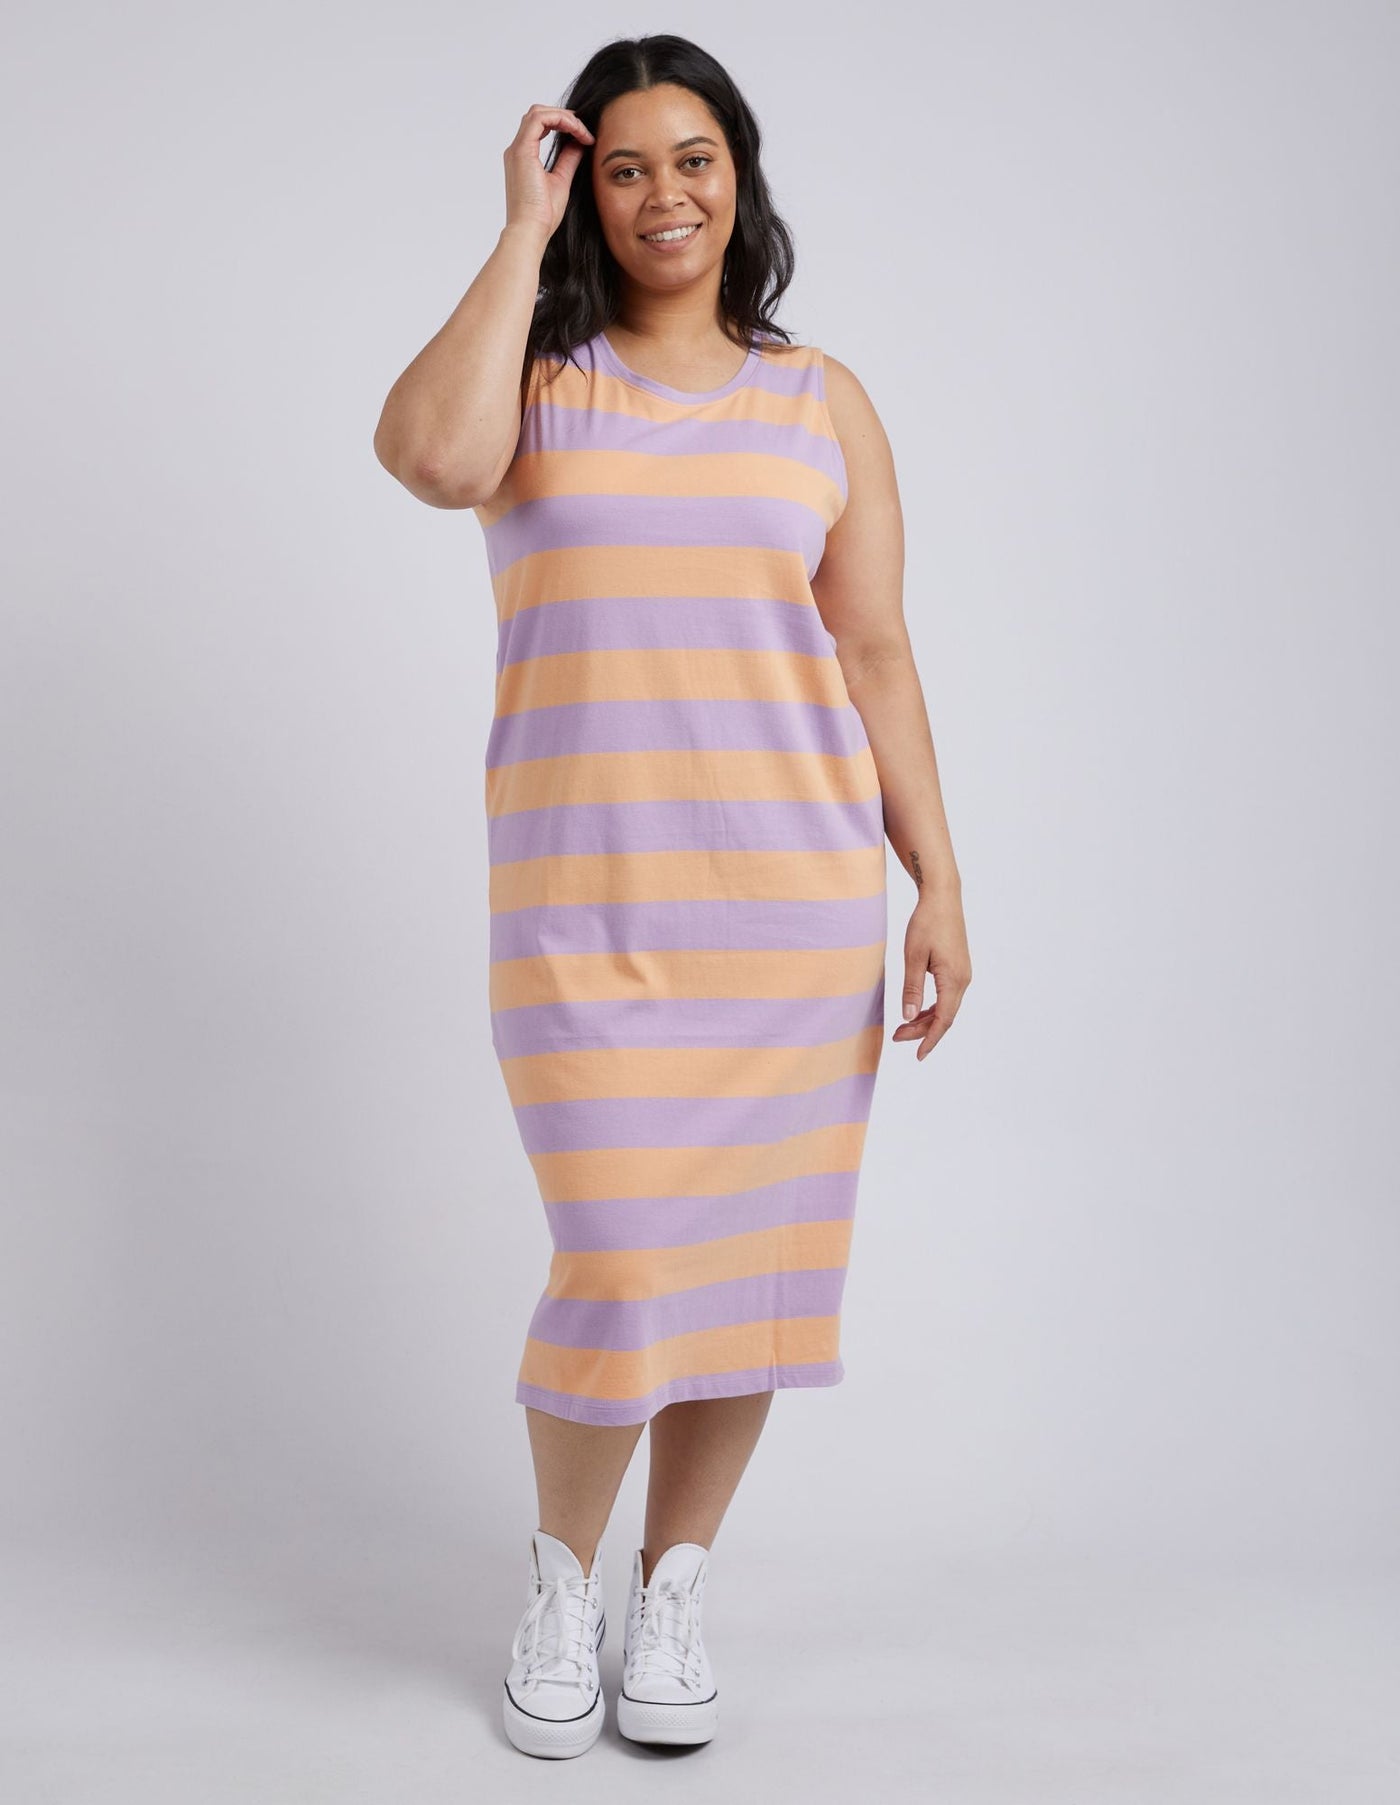 Horizon Tank Dress - Papaya & Periwinkle Stripe-Elm Lifestyle-Lima & Co